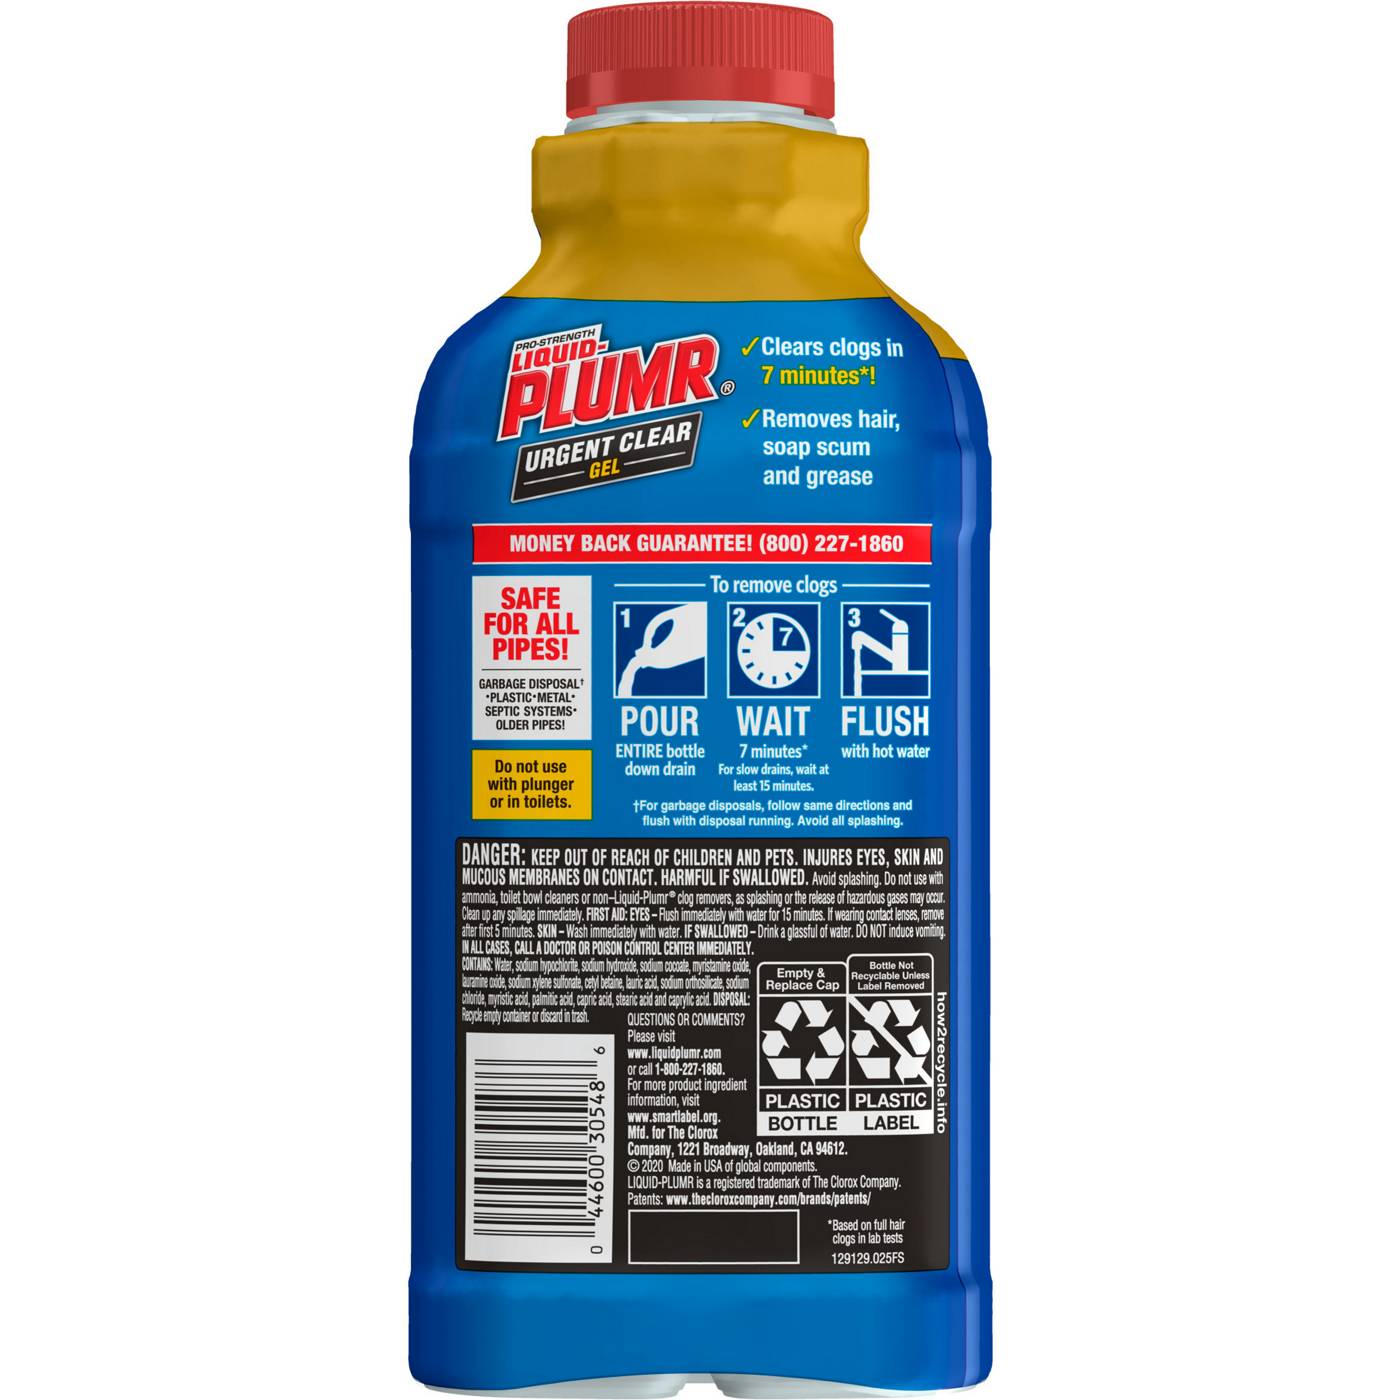 Liquid-Plumr Industrial Strength Urgent Clear, Liquid Drain Cleaner; image 5 of 5